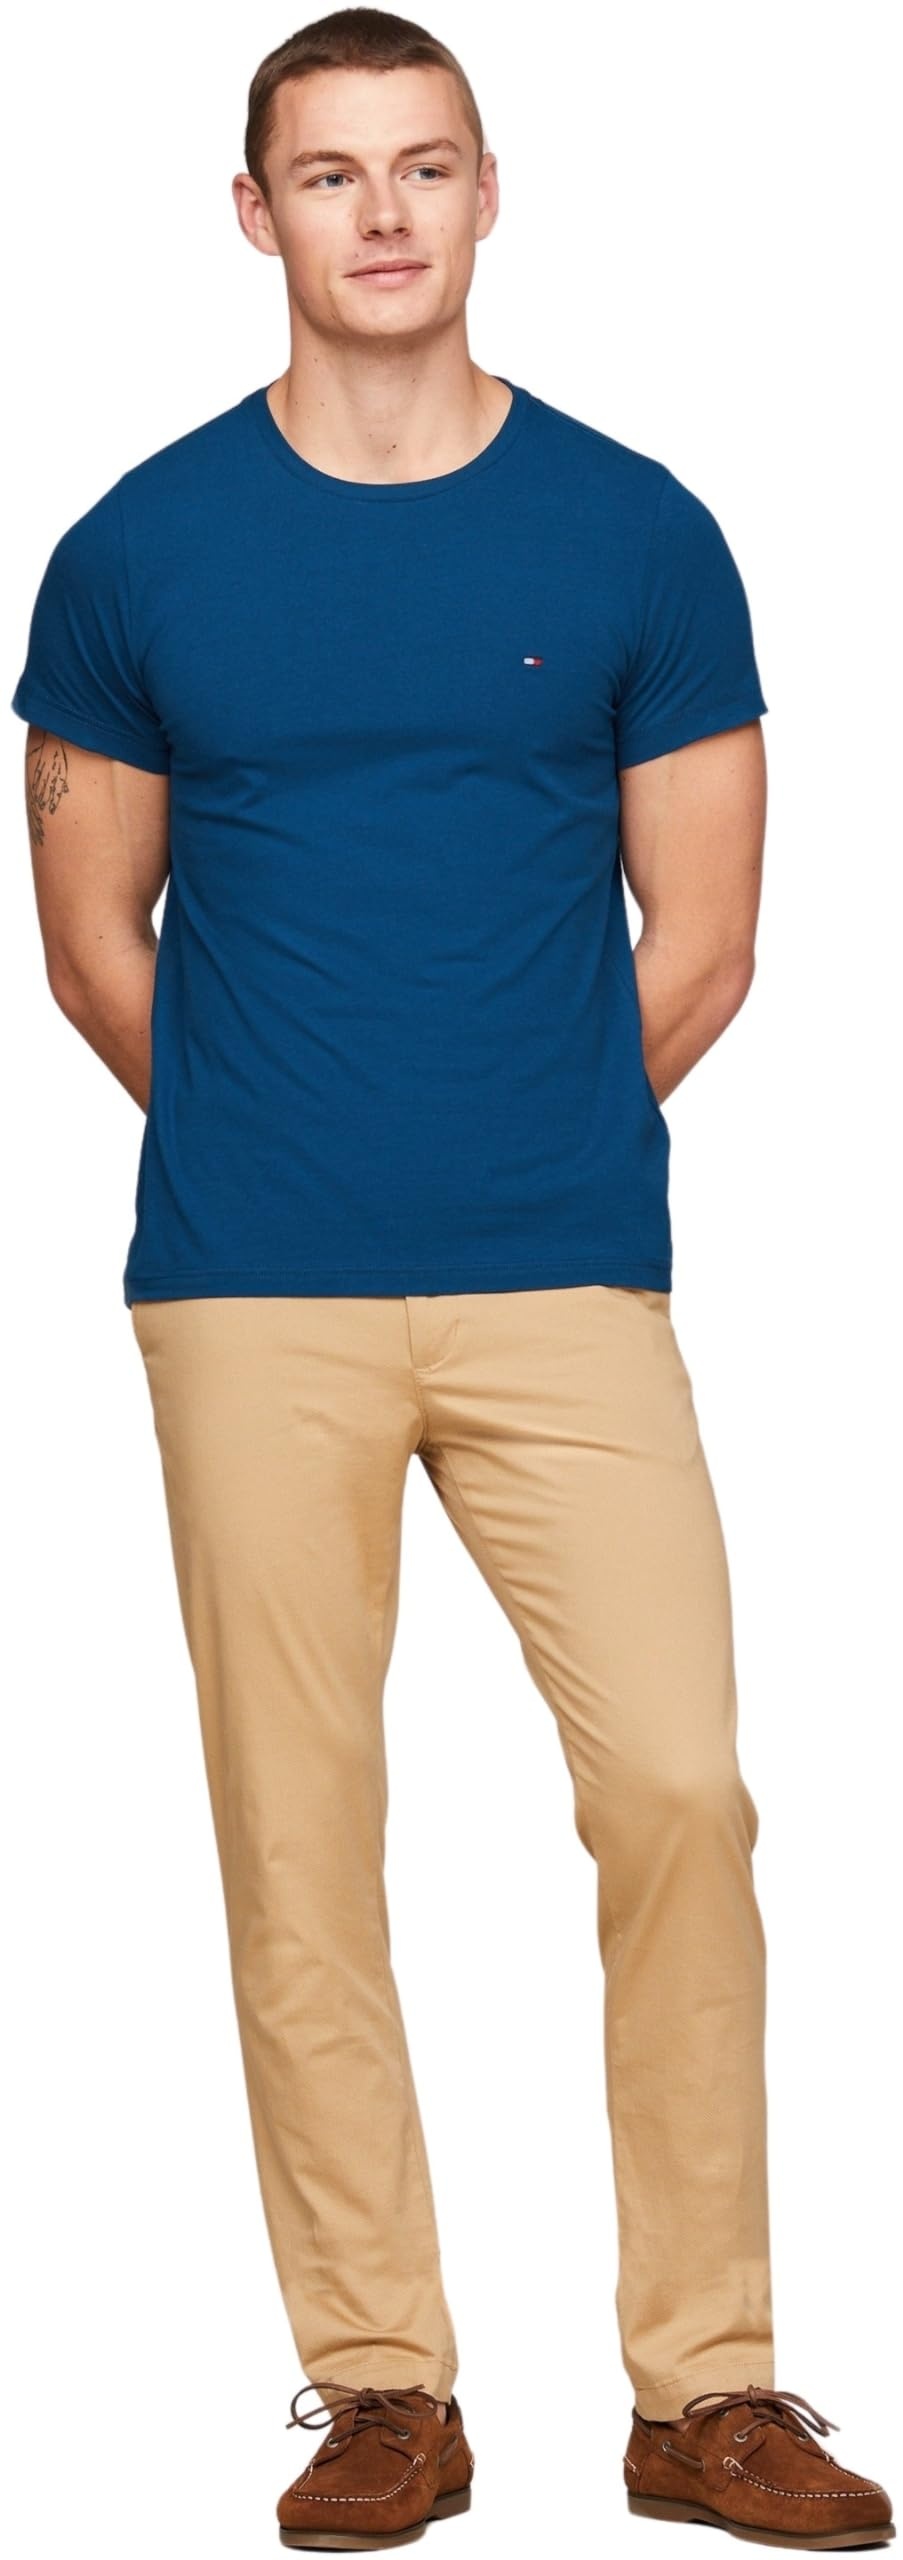 Tommy Hilfiger Herren T-Shirt Kurzarm Rundhalsausschnitt, Blau (Anchor Blue), XXXL